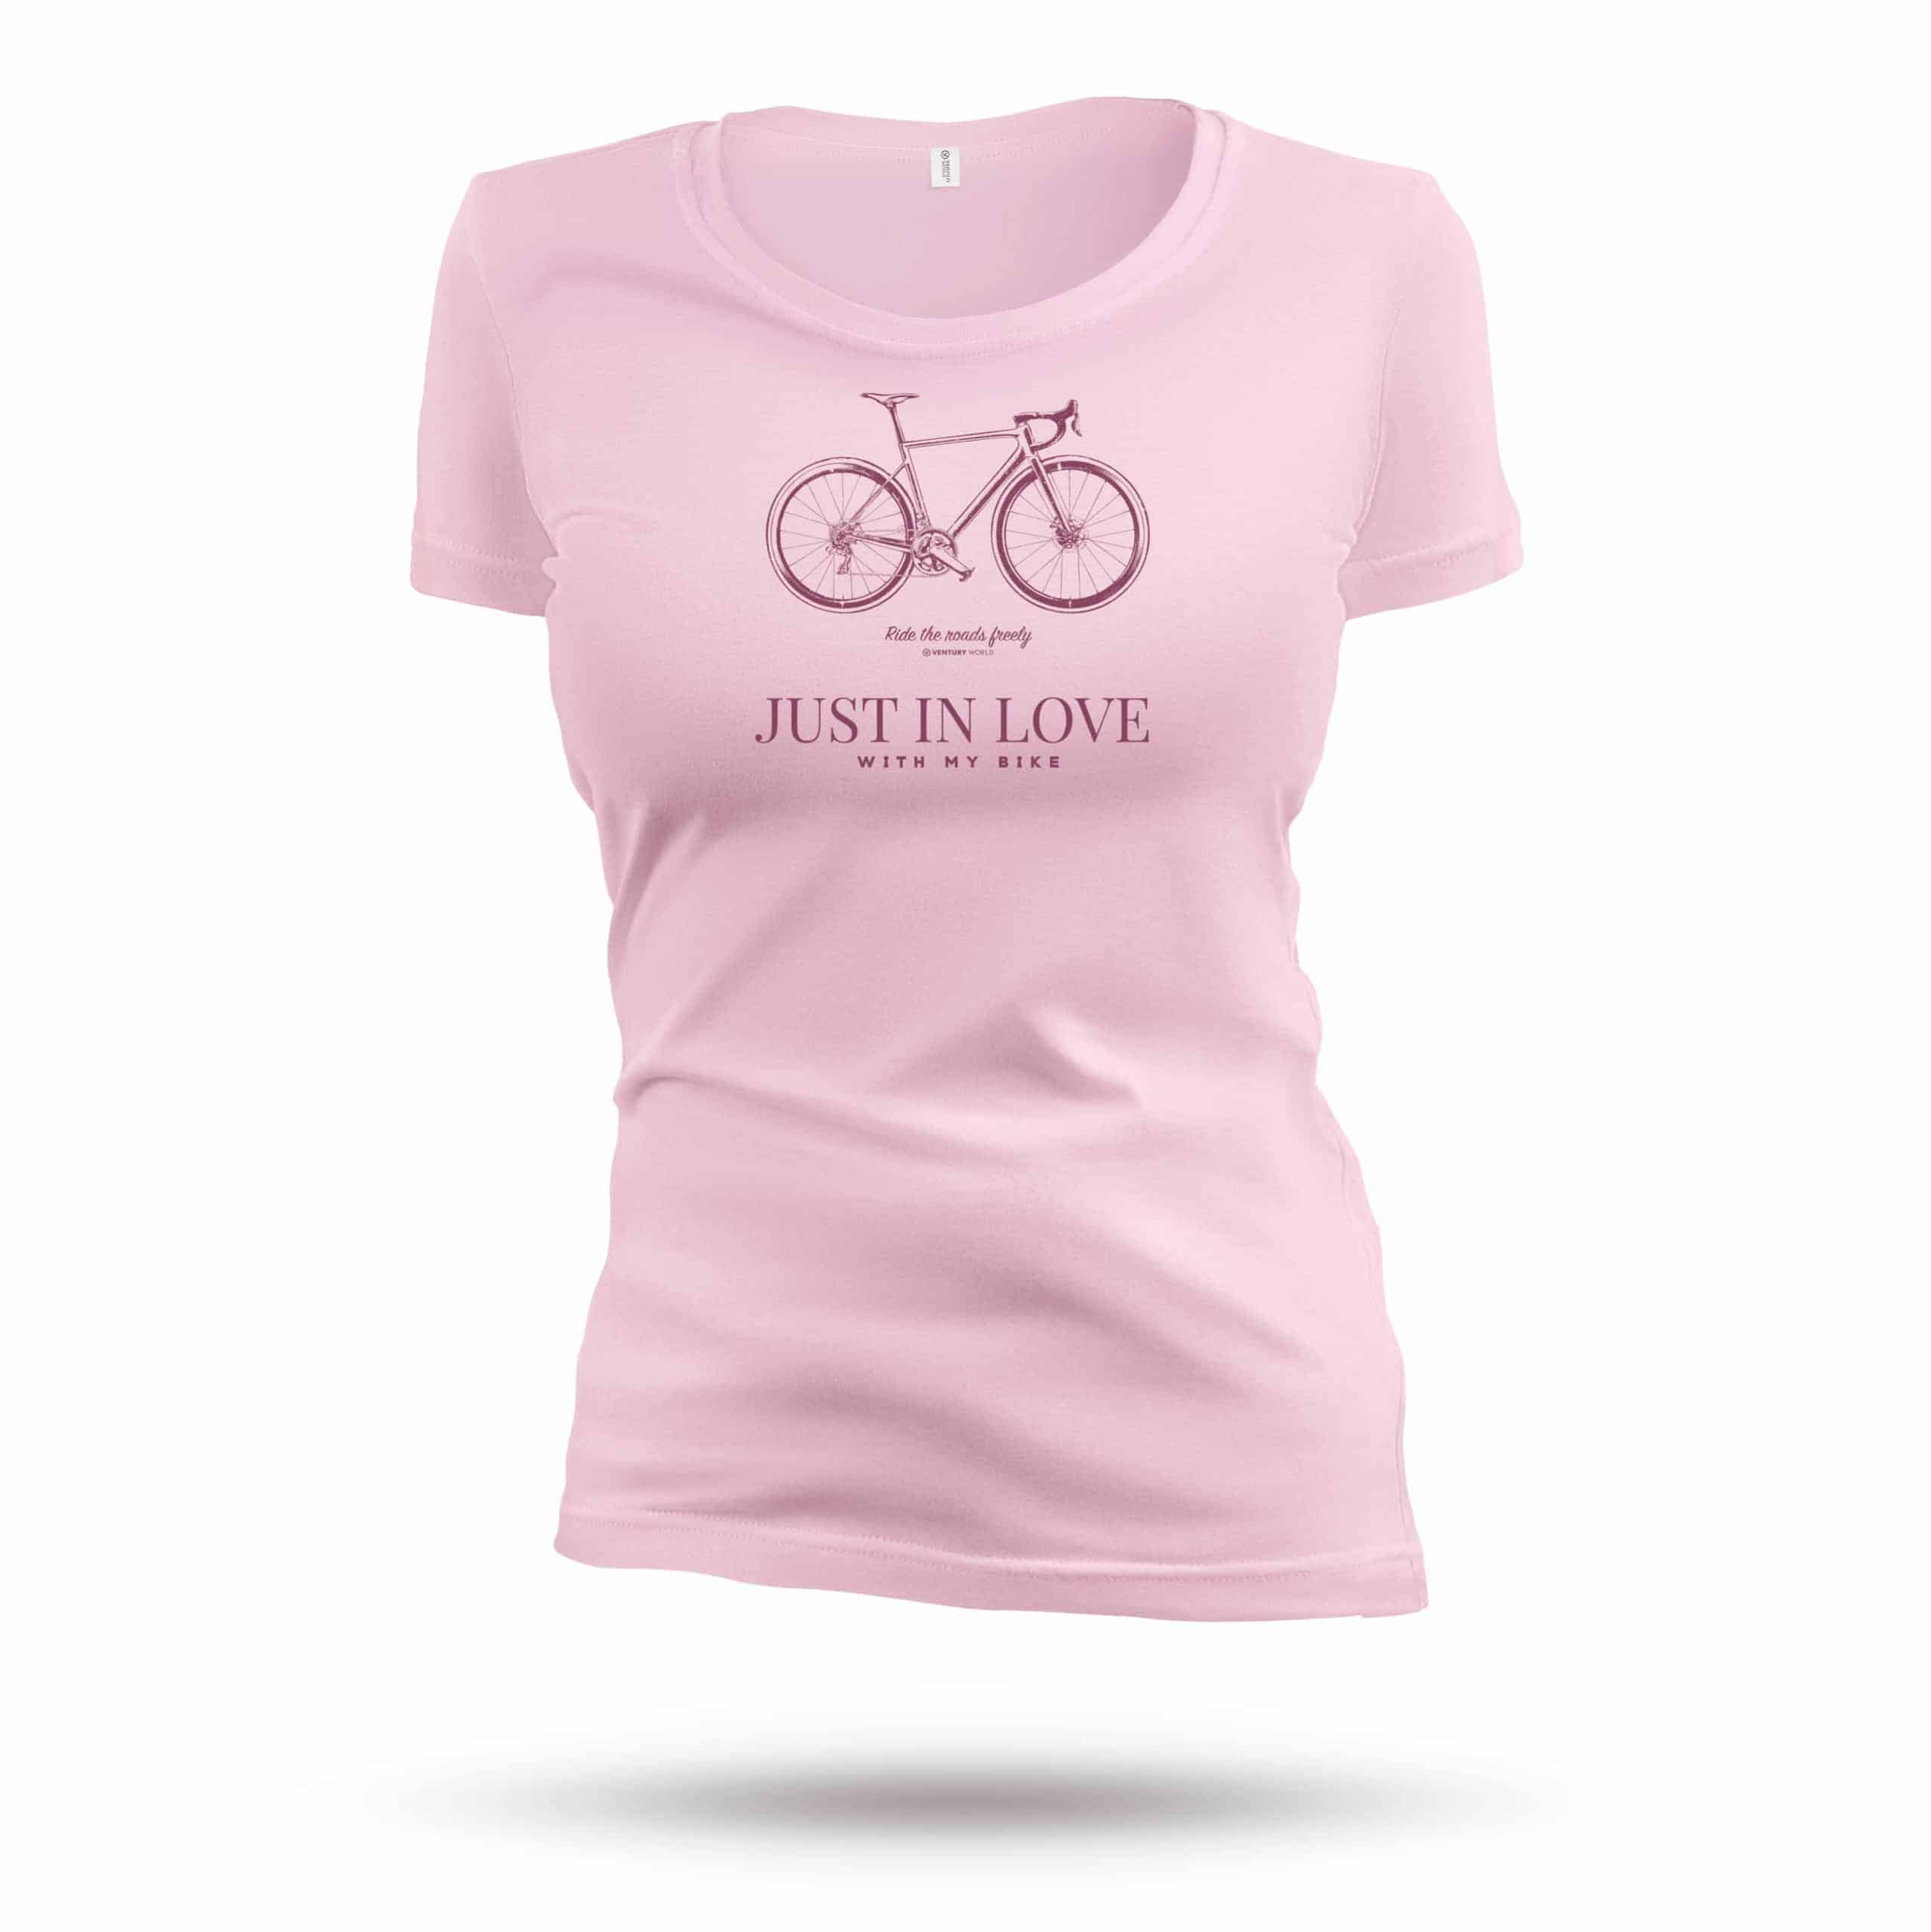 T-shirt cycling femme - Race Bike - Ride the roads freely - collection Live Freely femme 100% Naturel de grande qualité - taille ajusté grand col rond .